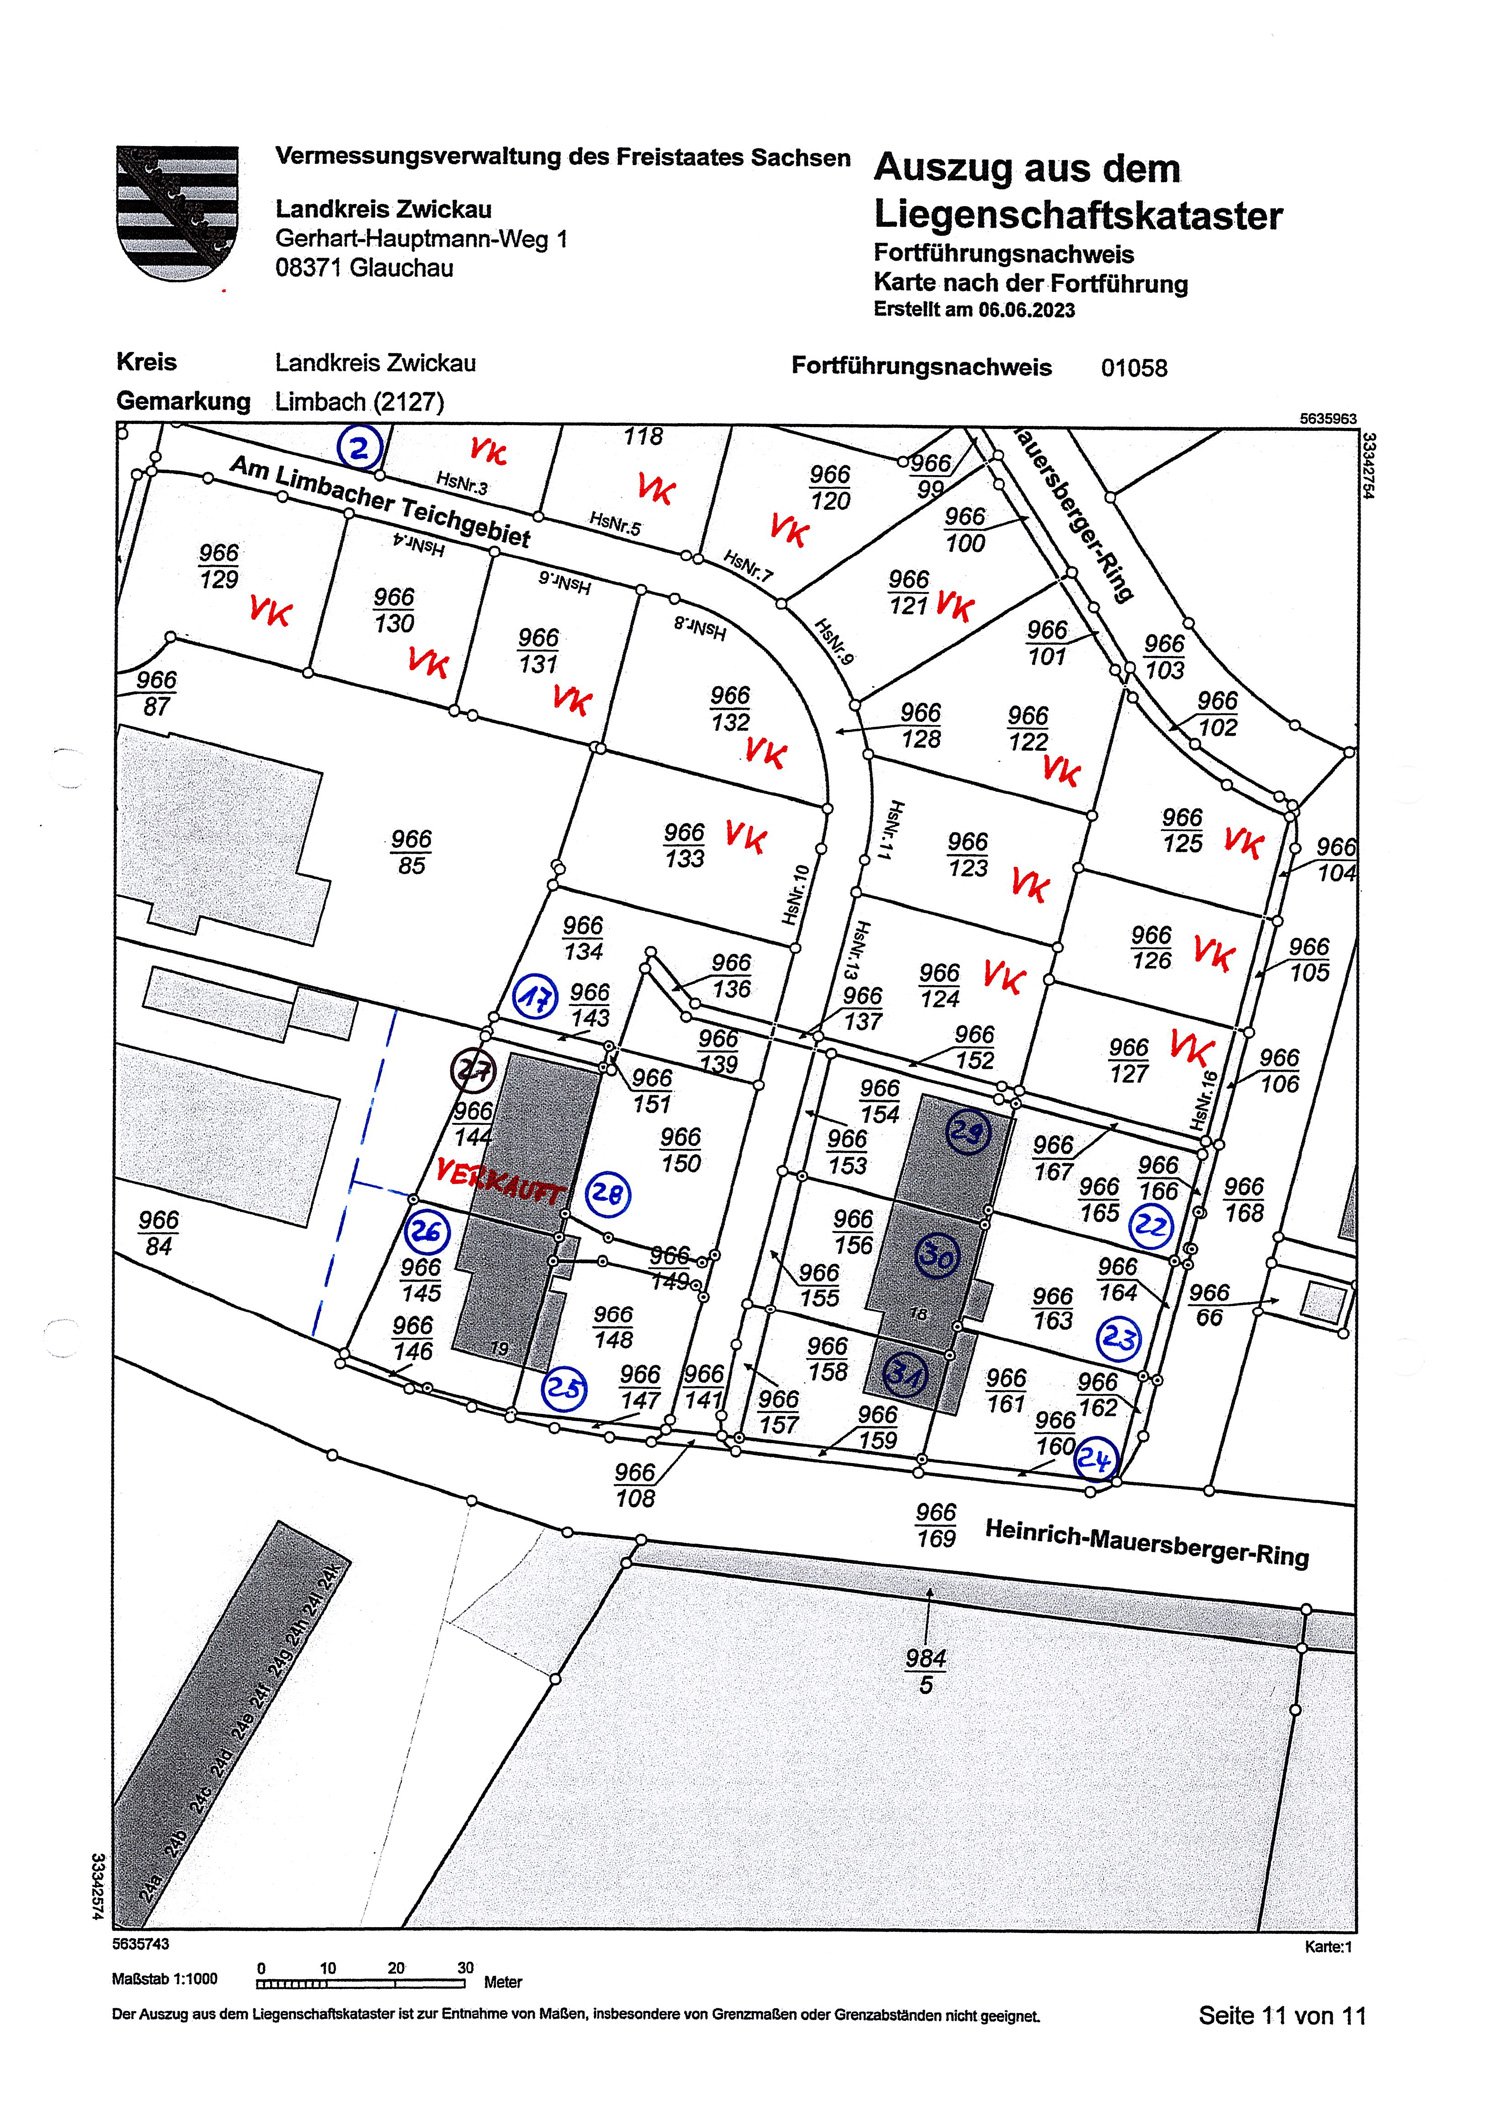 Image plots of land for sale Am Limbacher Teichgebiet, Limbach-Oberfrohna